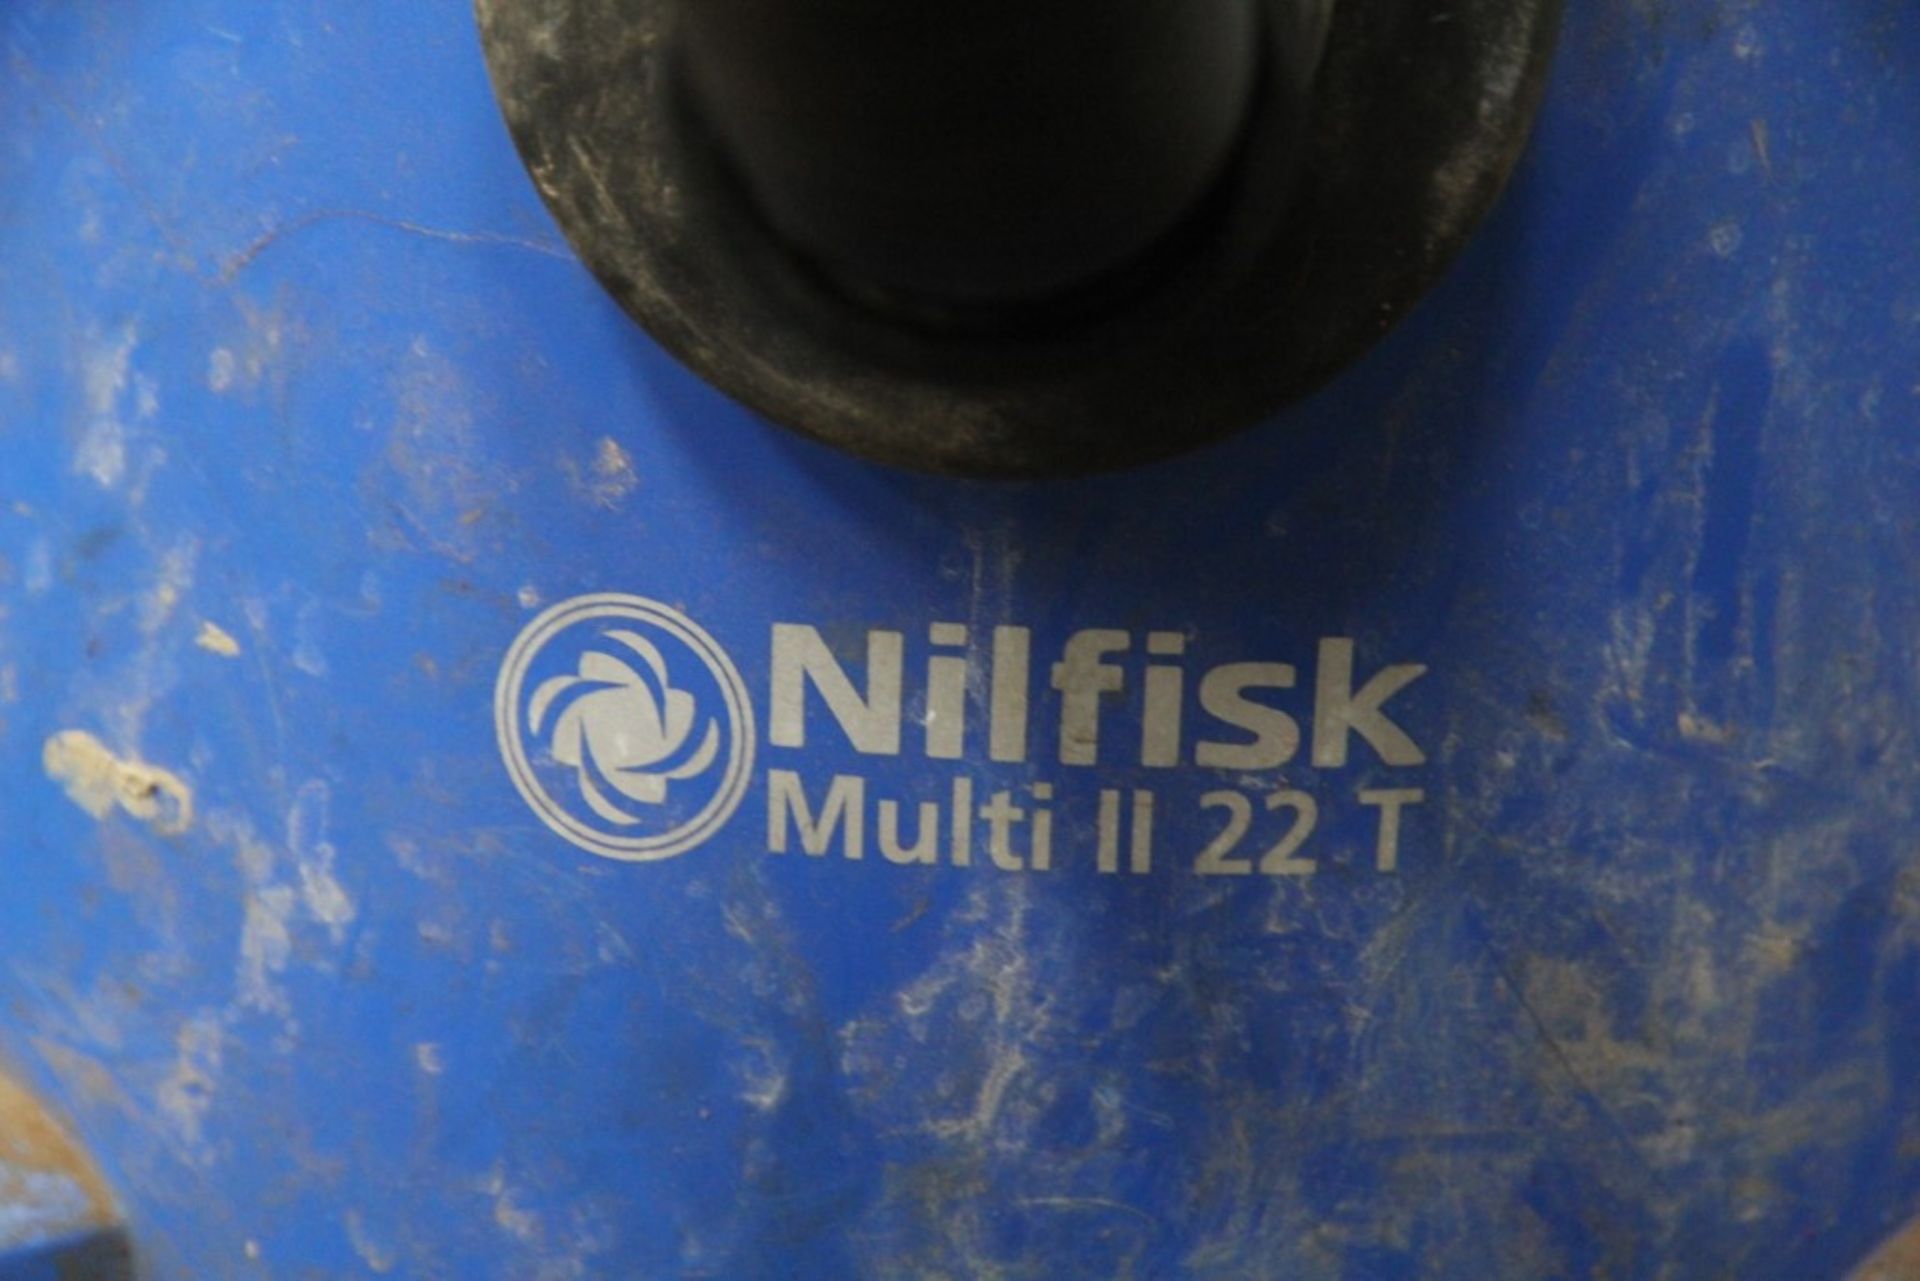 Nilfisk Multi II 22 T 240v Vacuum Cleaner (1 of) - Image 3 of 5